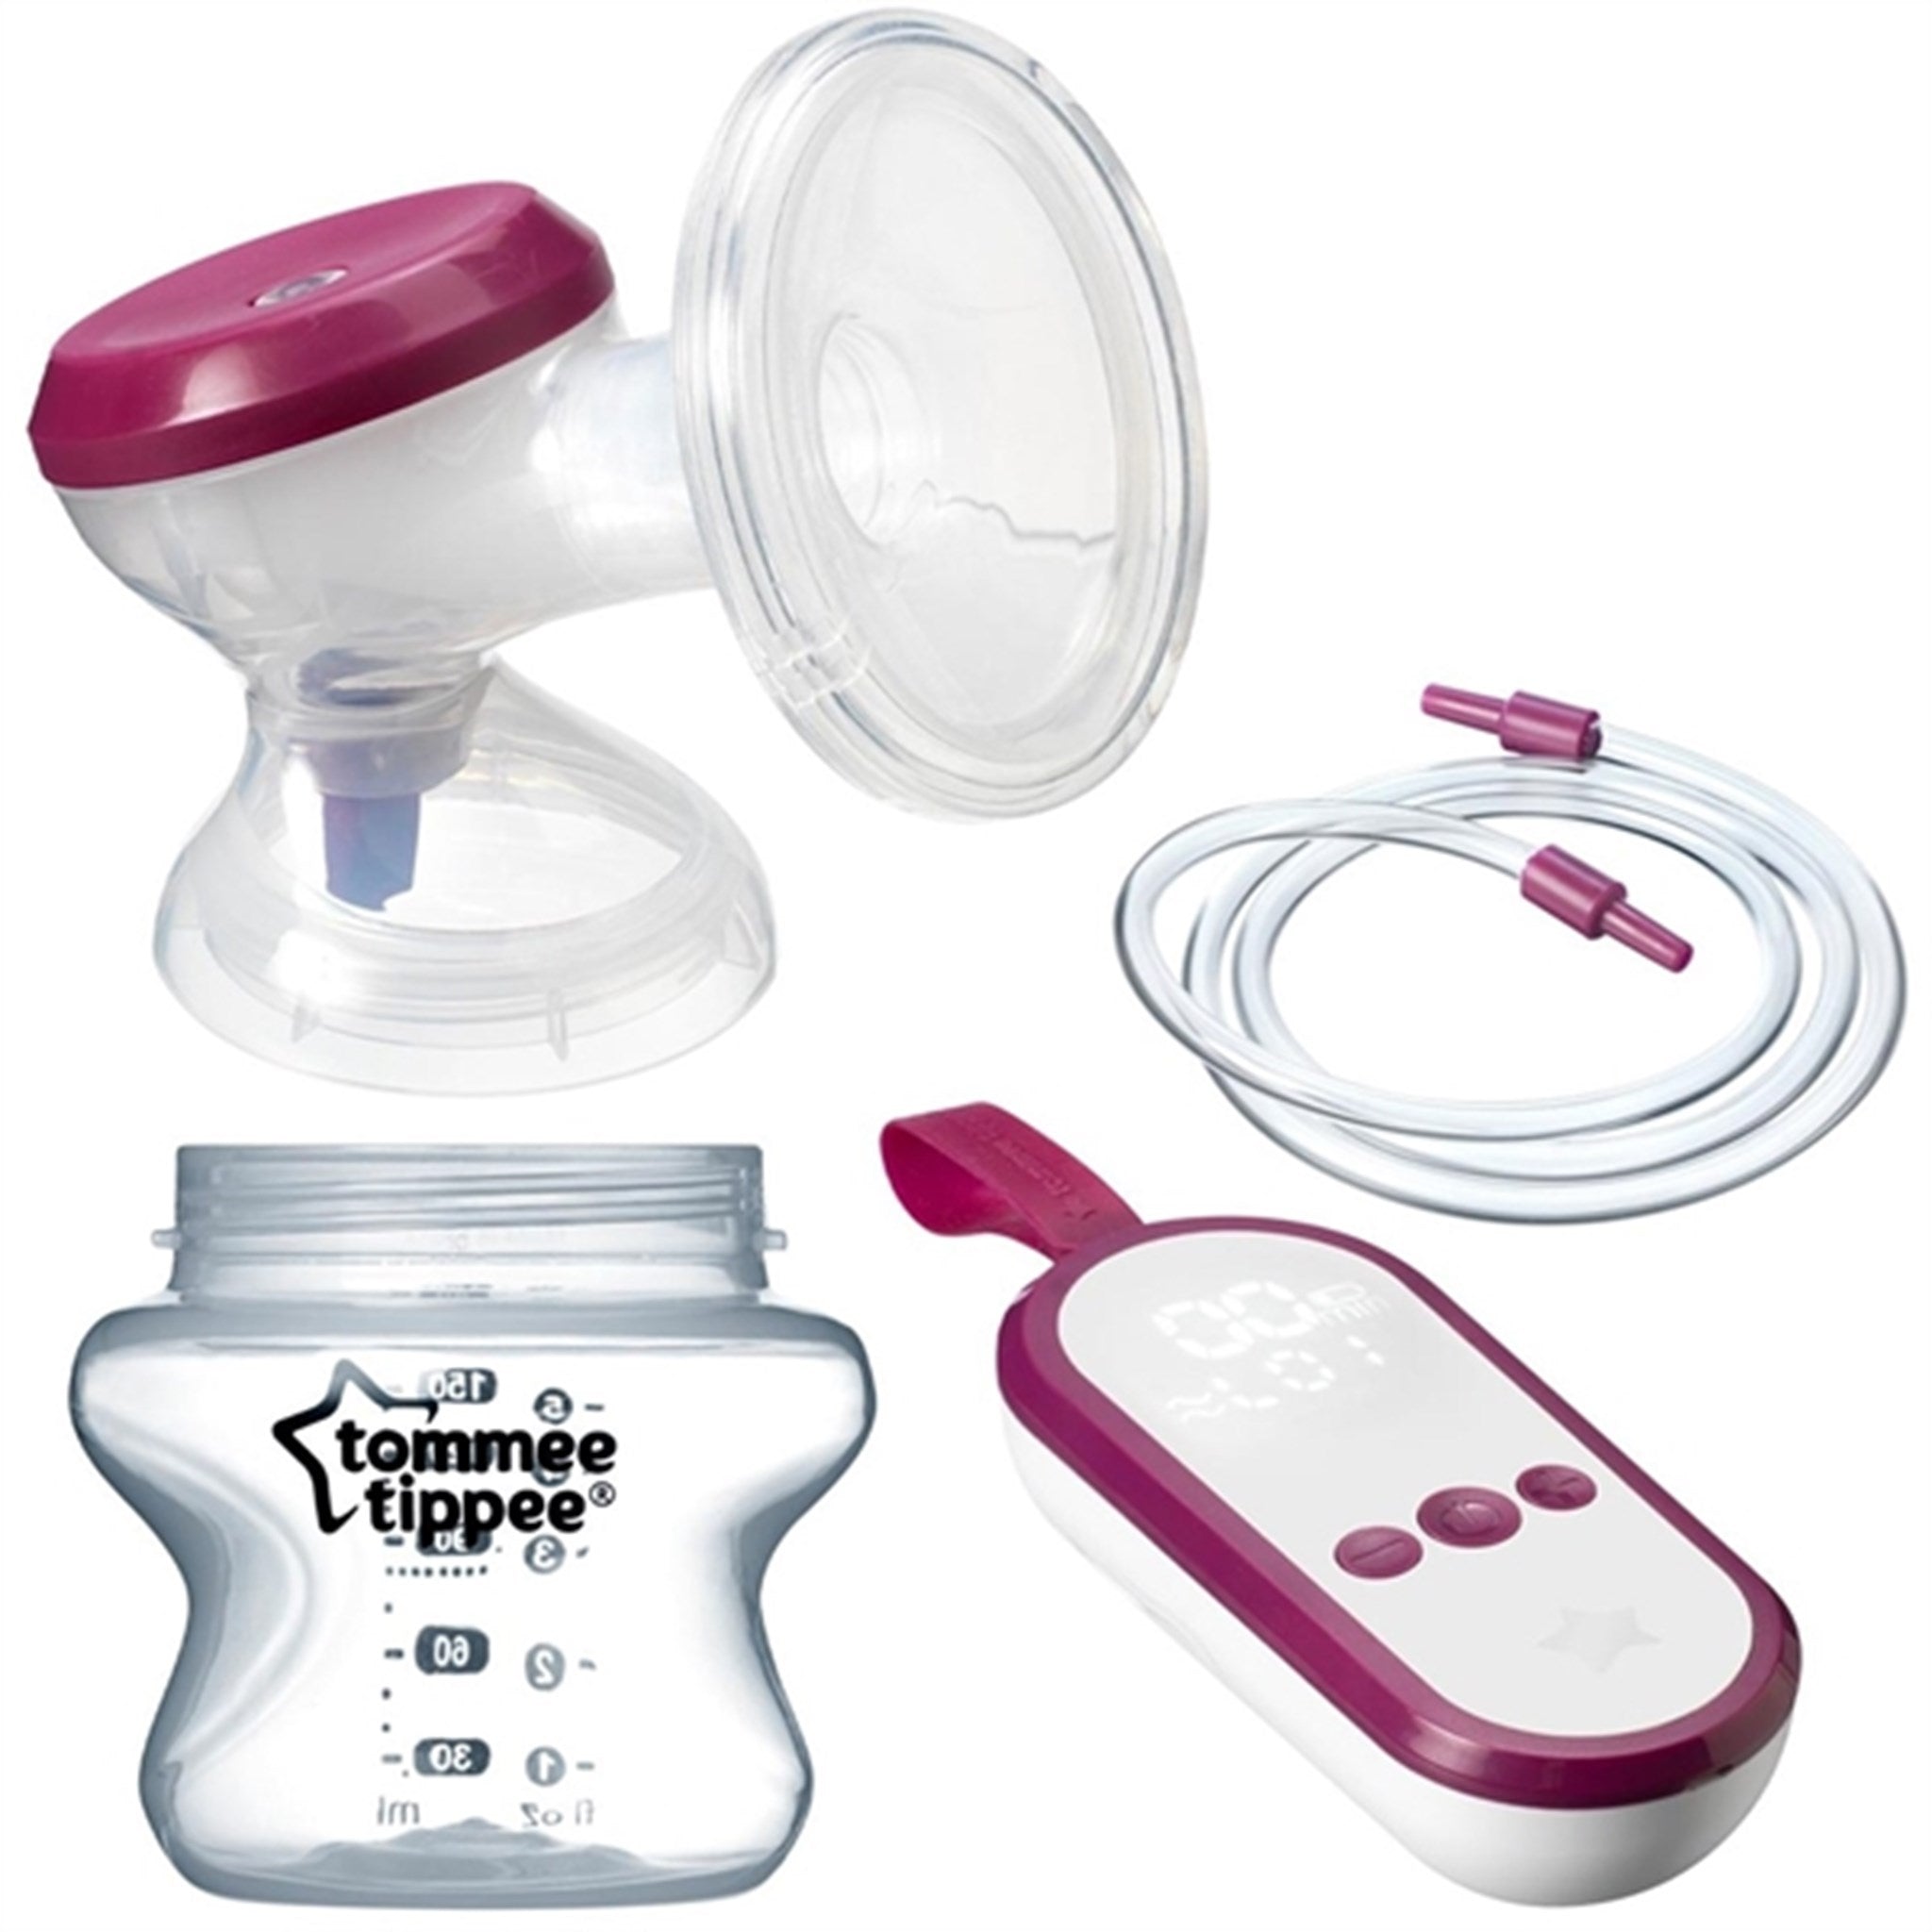 Tommee Tippee Single Electric Breast Pump 4